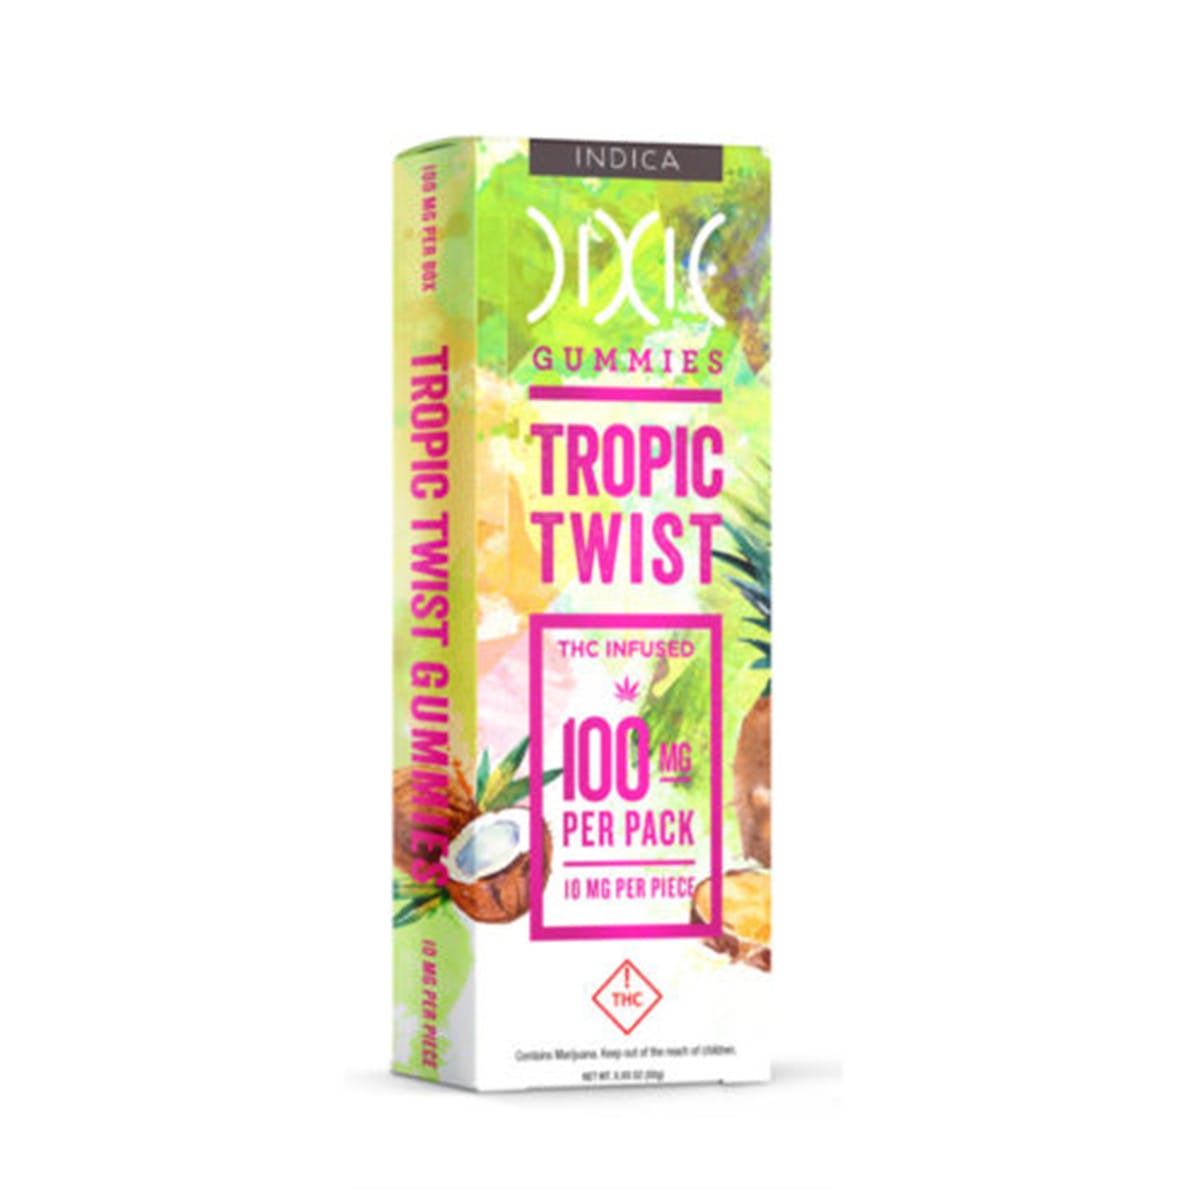 marijuana-dispensaries-dank-colorado-adult-use-in-denver-indica-tropic-twist-gummies-100mg